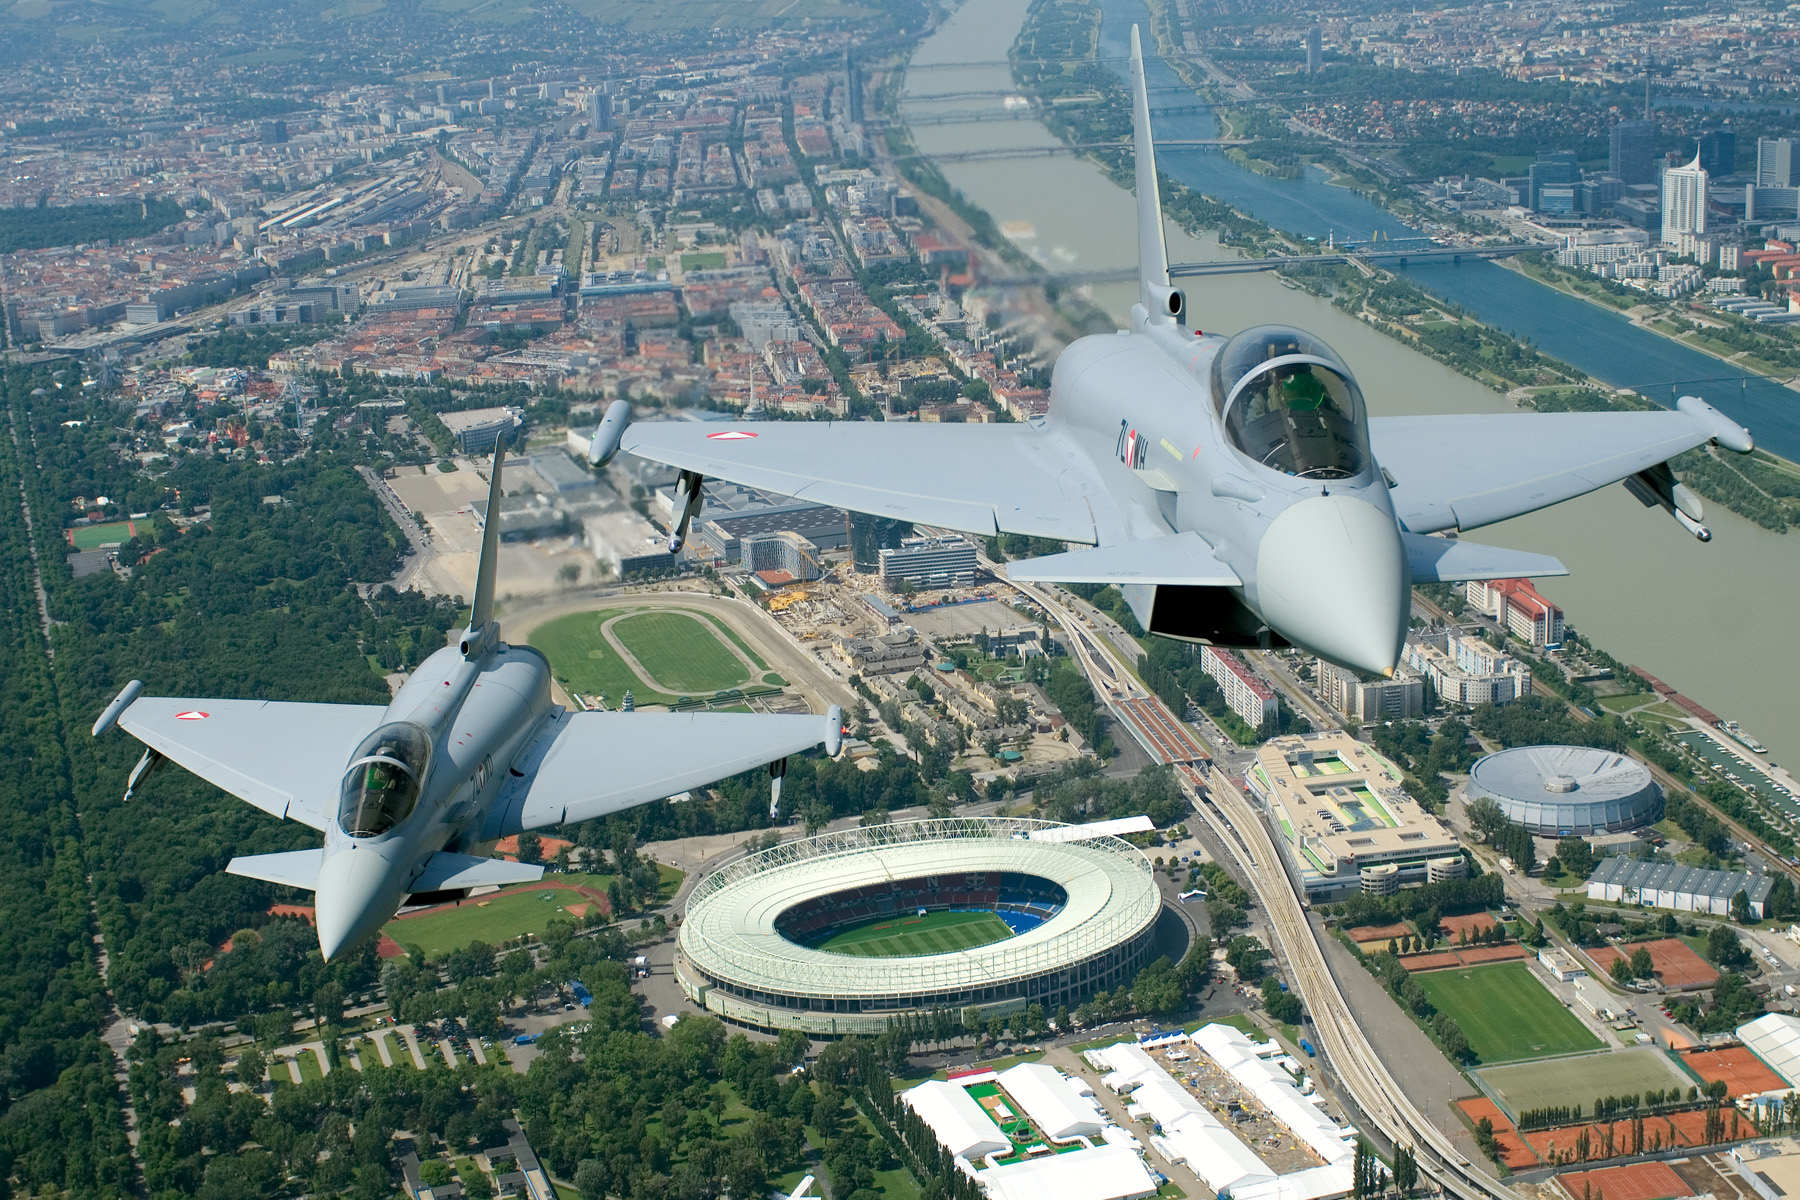 Handy-Wallpaper Eurofighter Taifun, Militär, Düsenjäger kostenlos herunterladen.